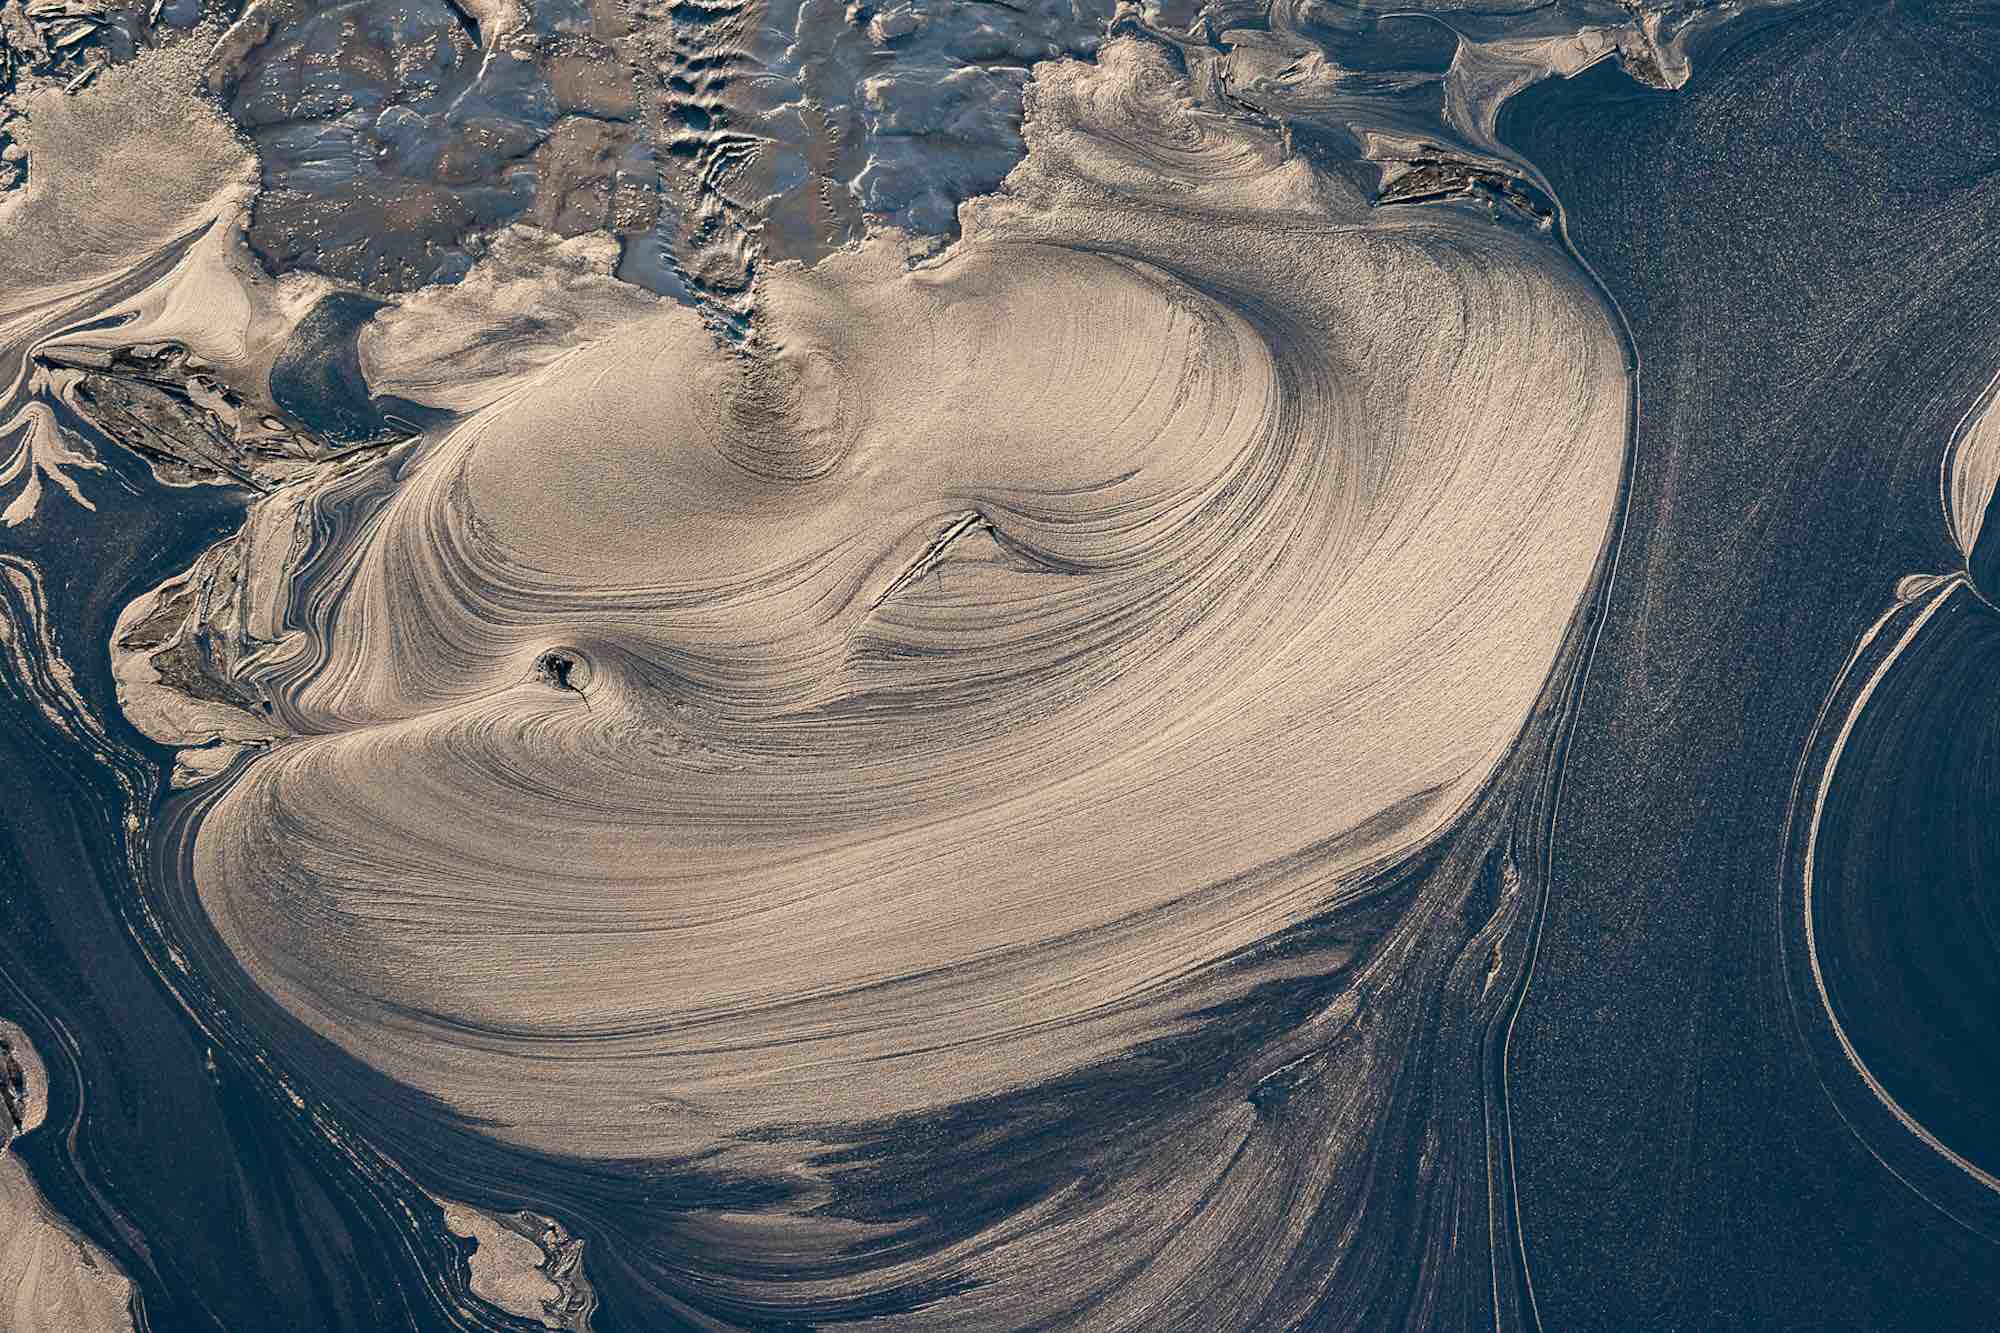 Oil sands - Yann Arthus-Bertrand